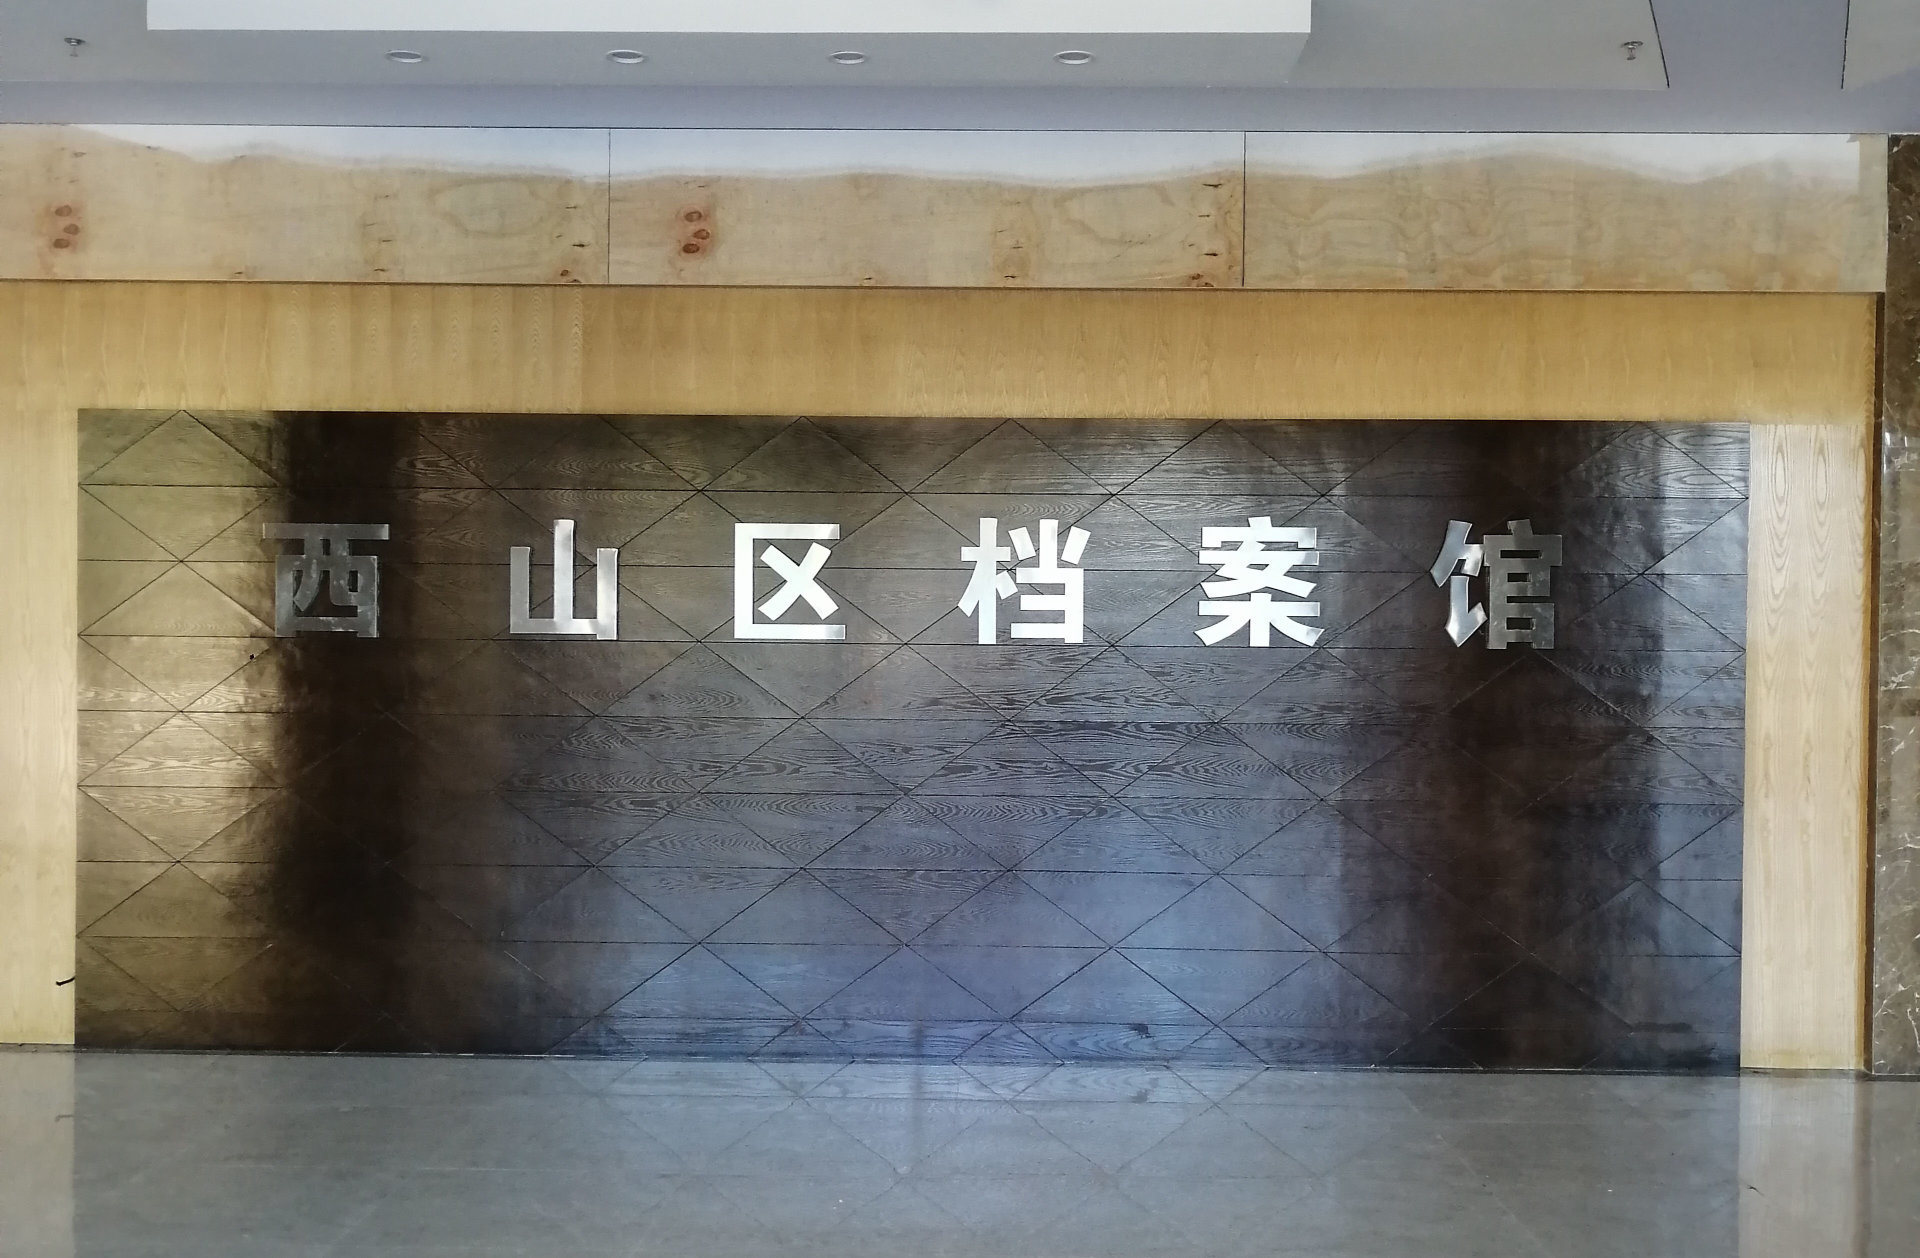 Kunming Wuhua Archives Bureau project2 - INVT Power